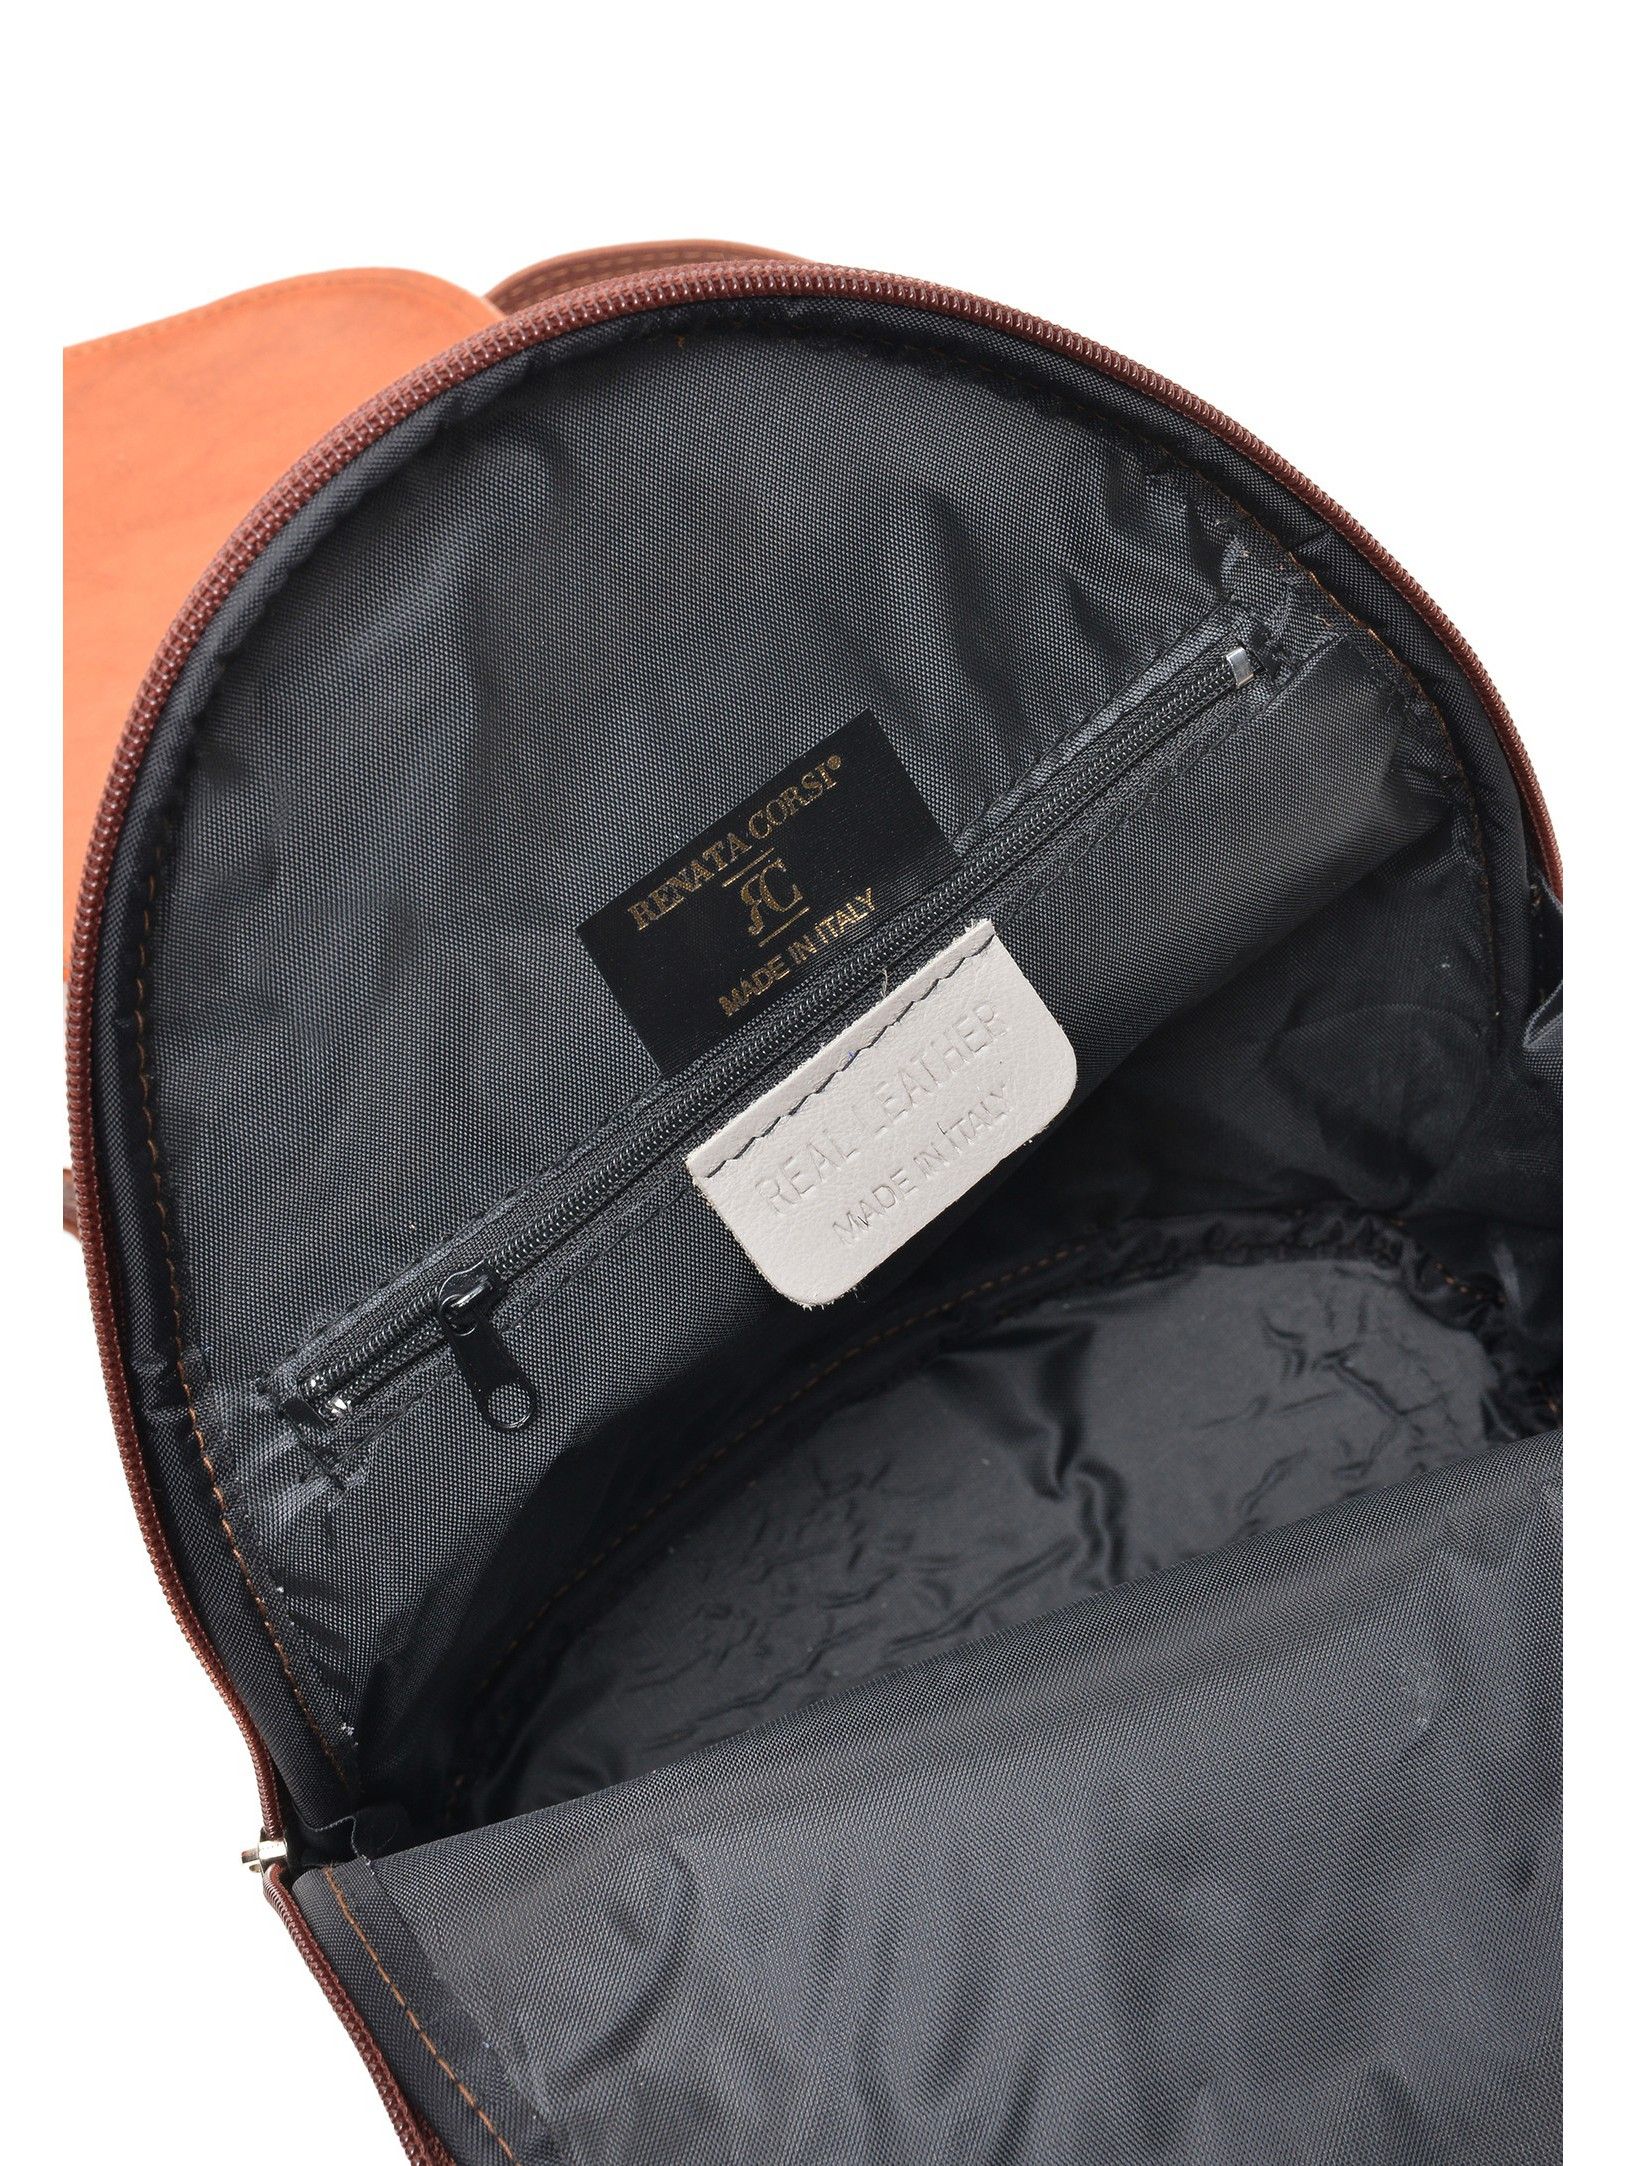 Backpack
100% cow leather
Front zip closure
Inner zip pocket
Back zip pocket
Dimensions (L): 27x23x10.5 cm
Handle: / cm
Shoulder strap: 2x95 cm adjustable